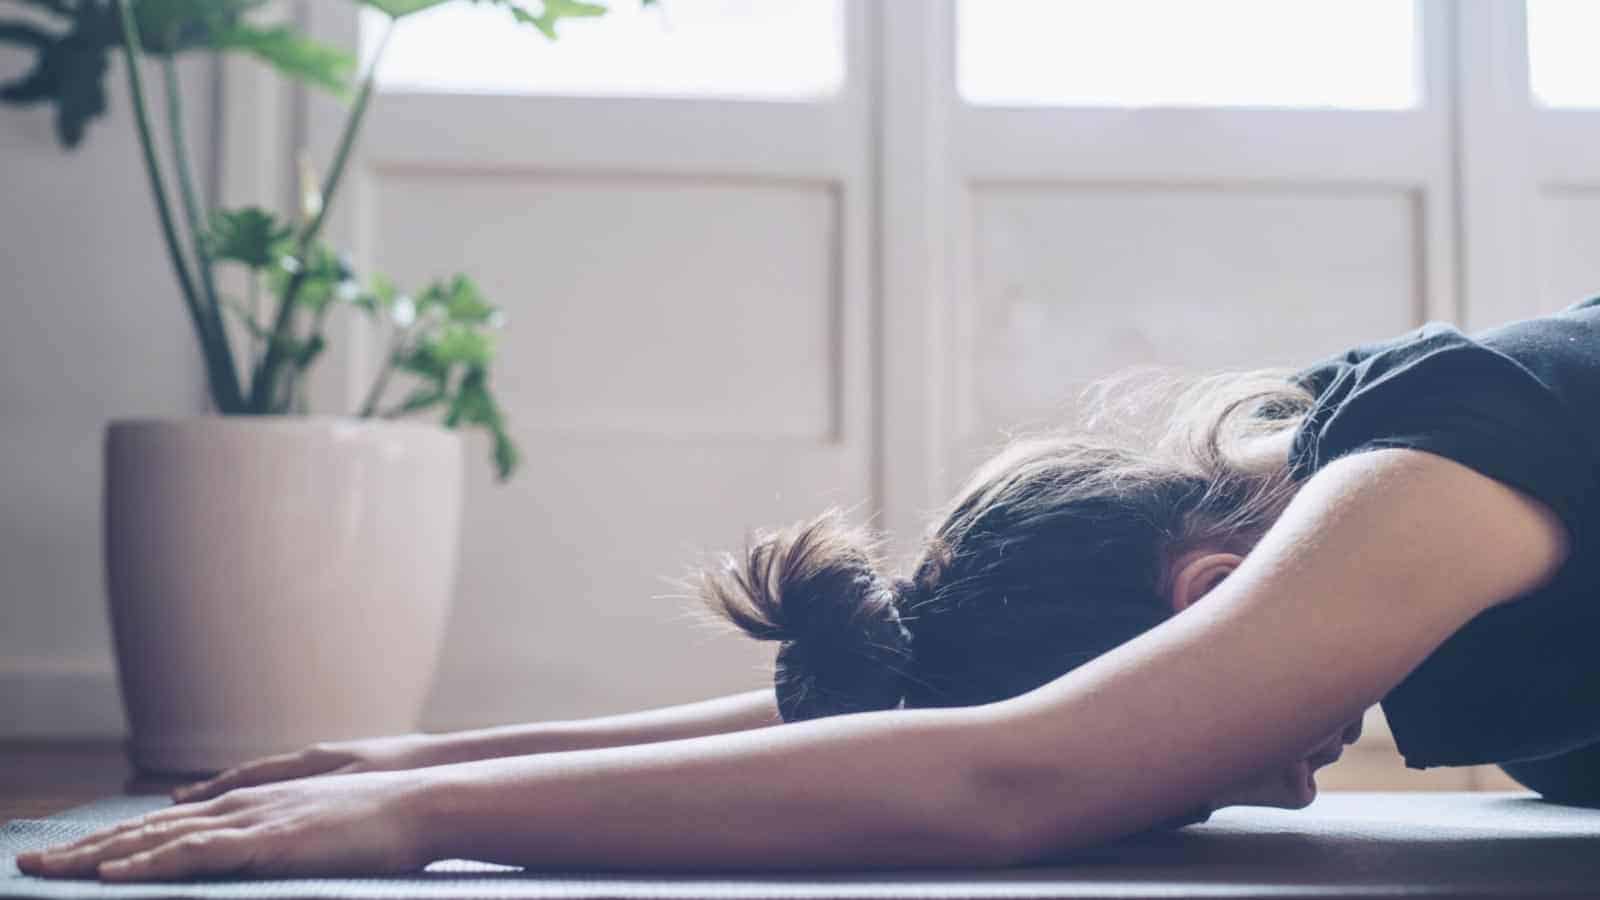 Can regular yoga practice change the body